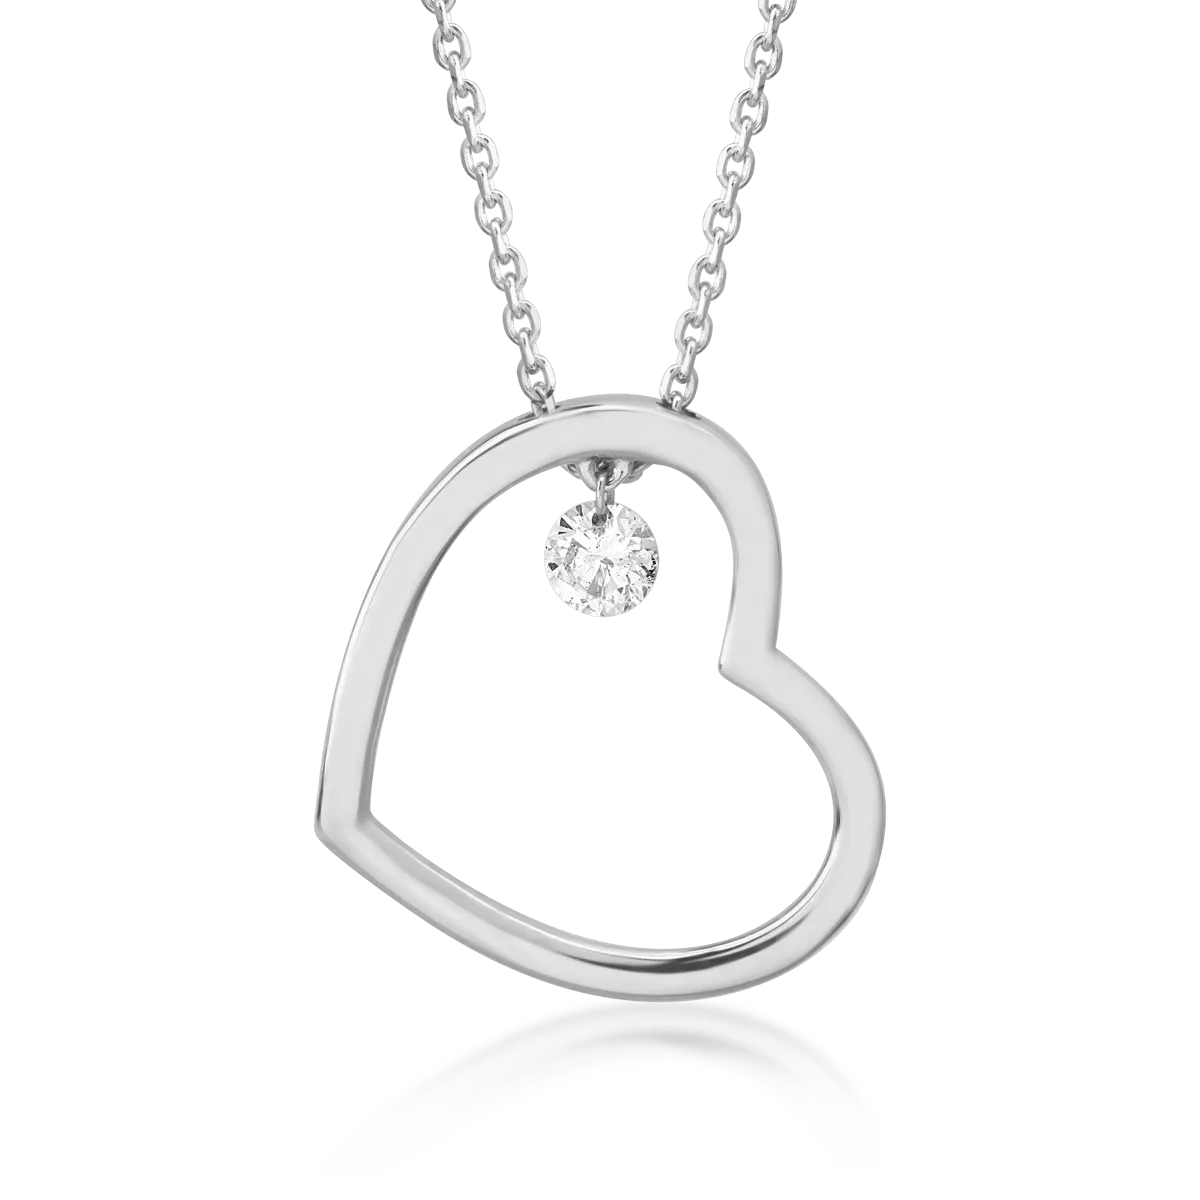 18K white gold pendant chain with 0.15ct diamond